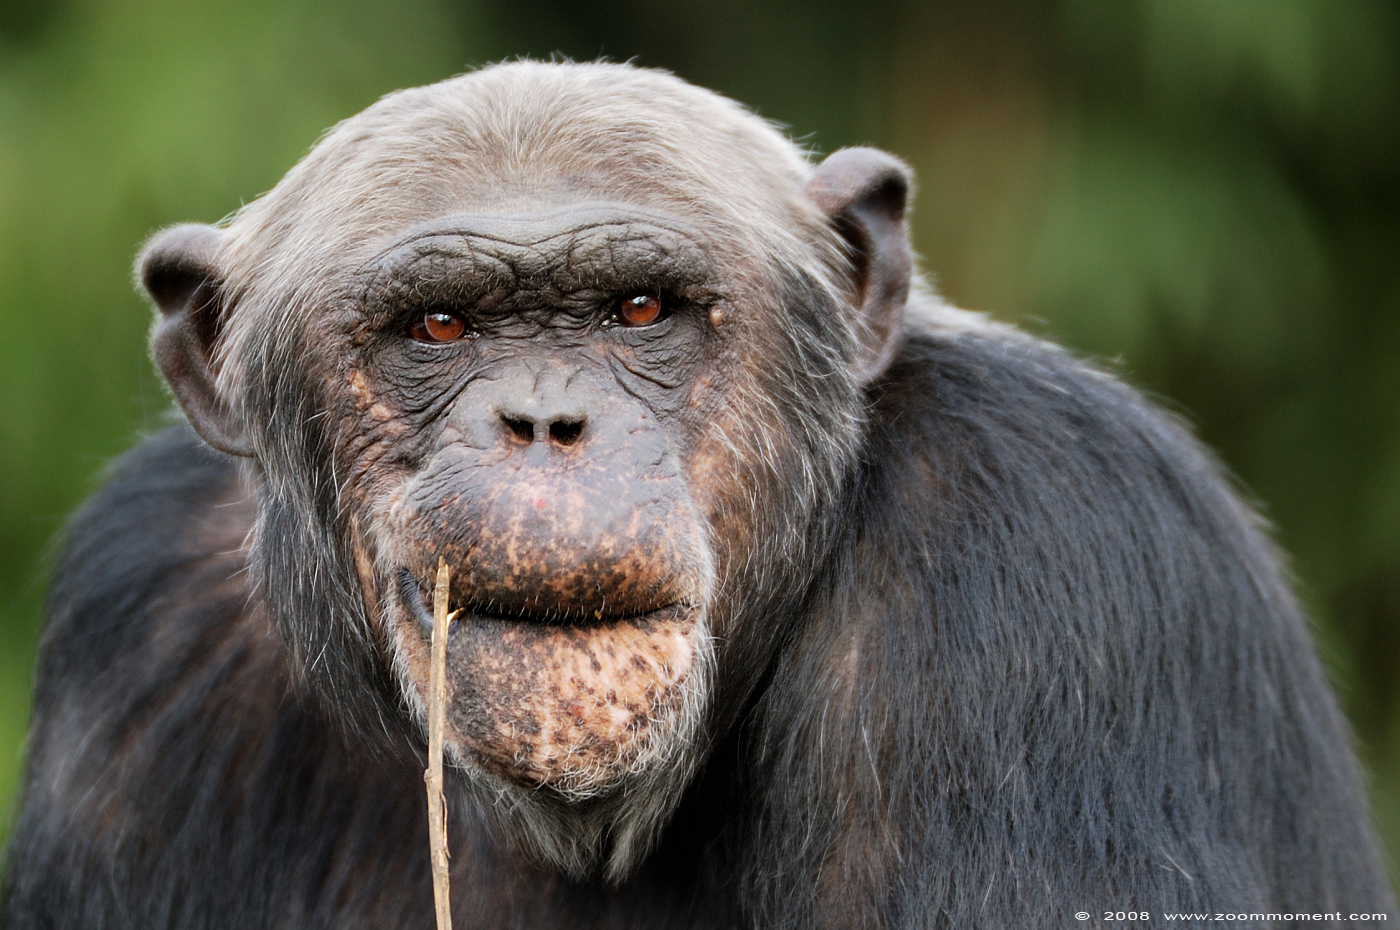 chimpansee  ( Pan troglodytes ) chimpanse chimpanzee
关键词: Olmen zoo Belgium chimpansee Pan troglodytes chimpanzee